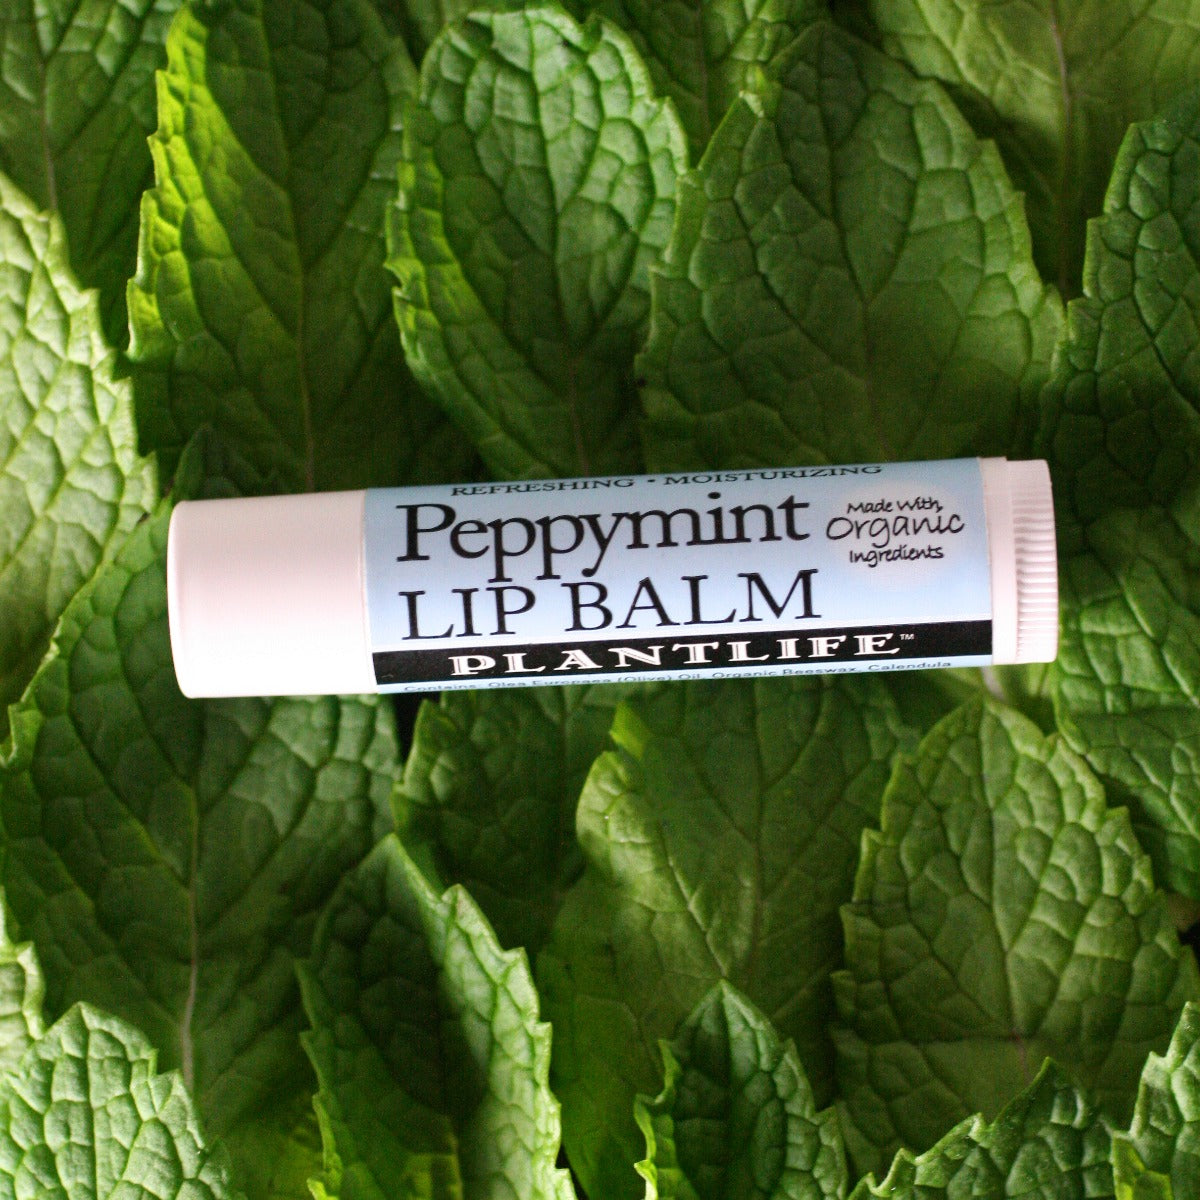 Peppermint Plant Based  Lip Balm